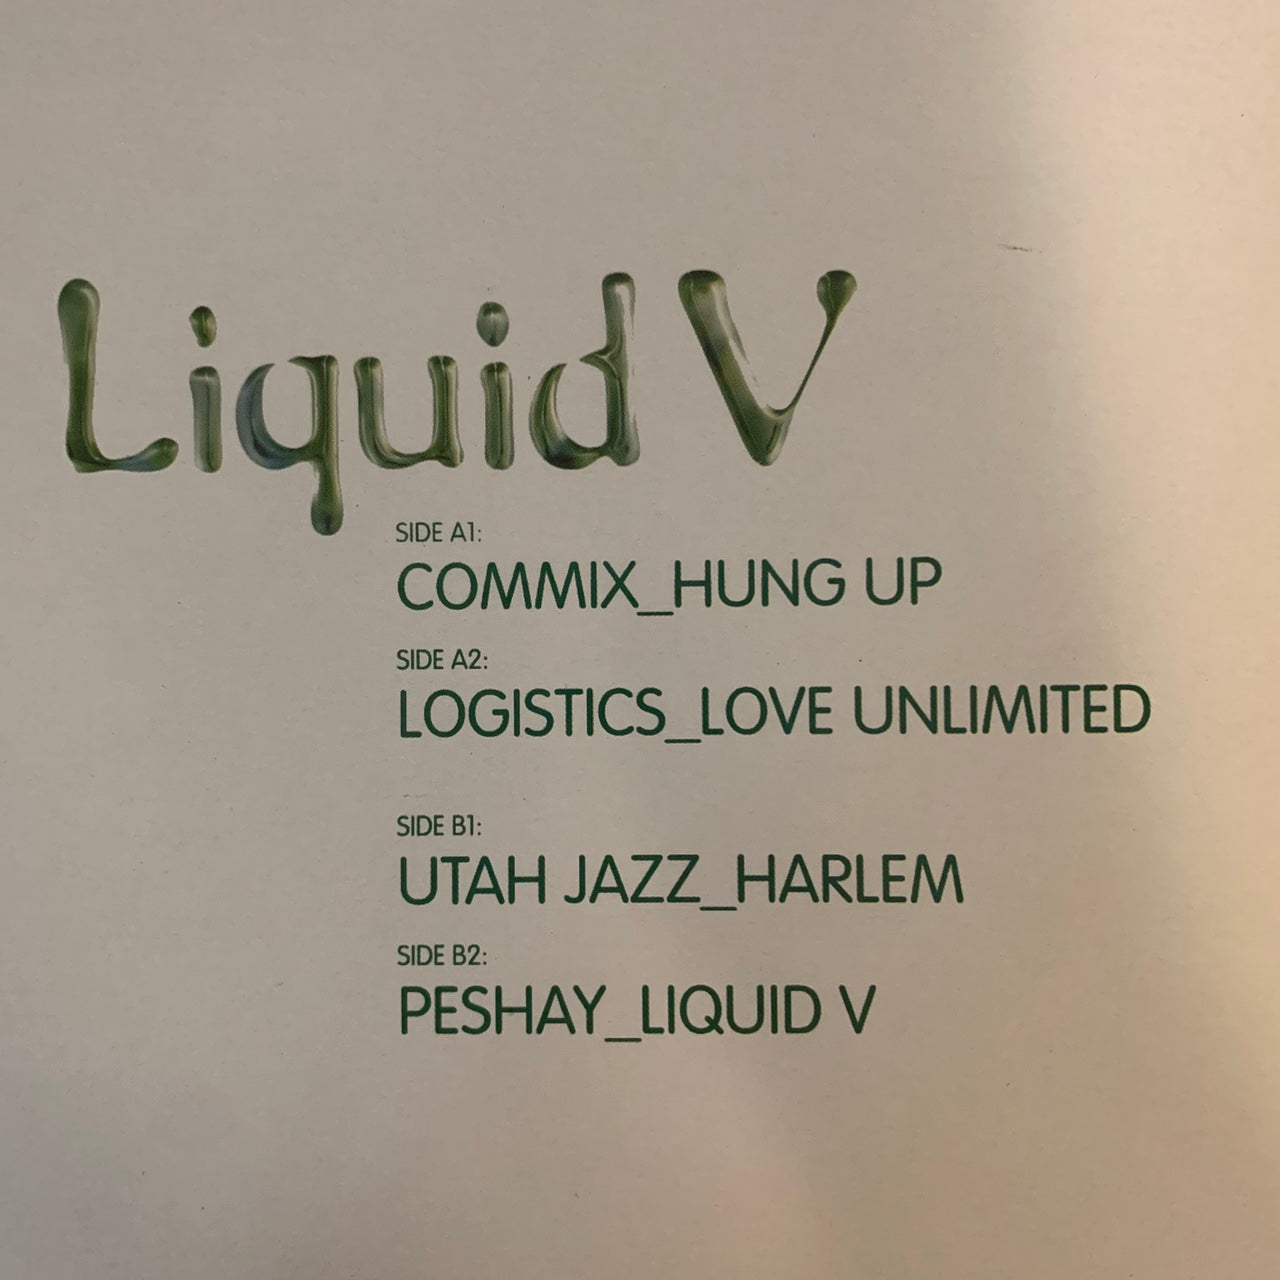 Liquid V Feat Commix, Logistics, Utah Jazz and Peshay 4 Track 2 x 12inch Vinyl